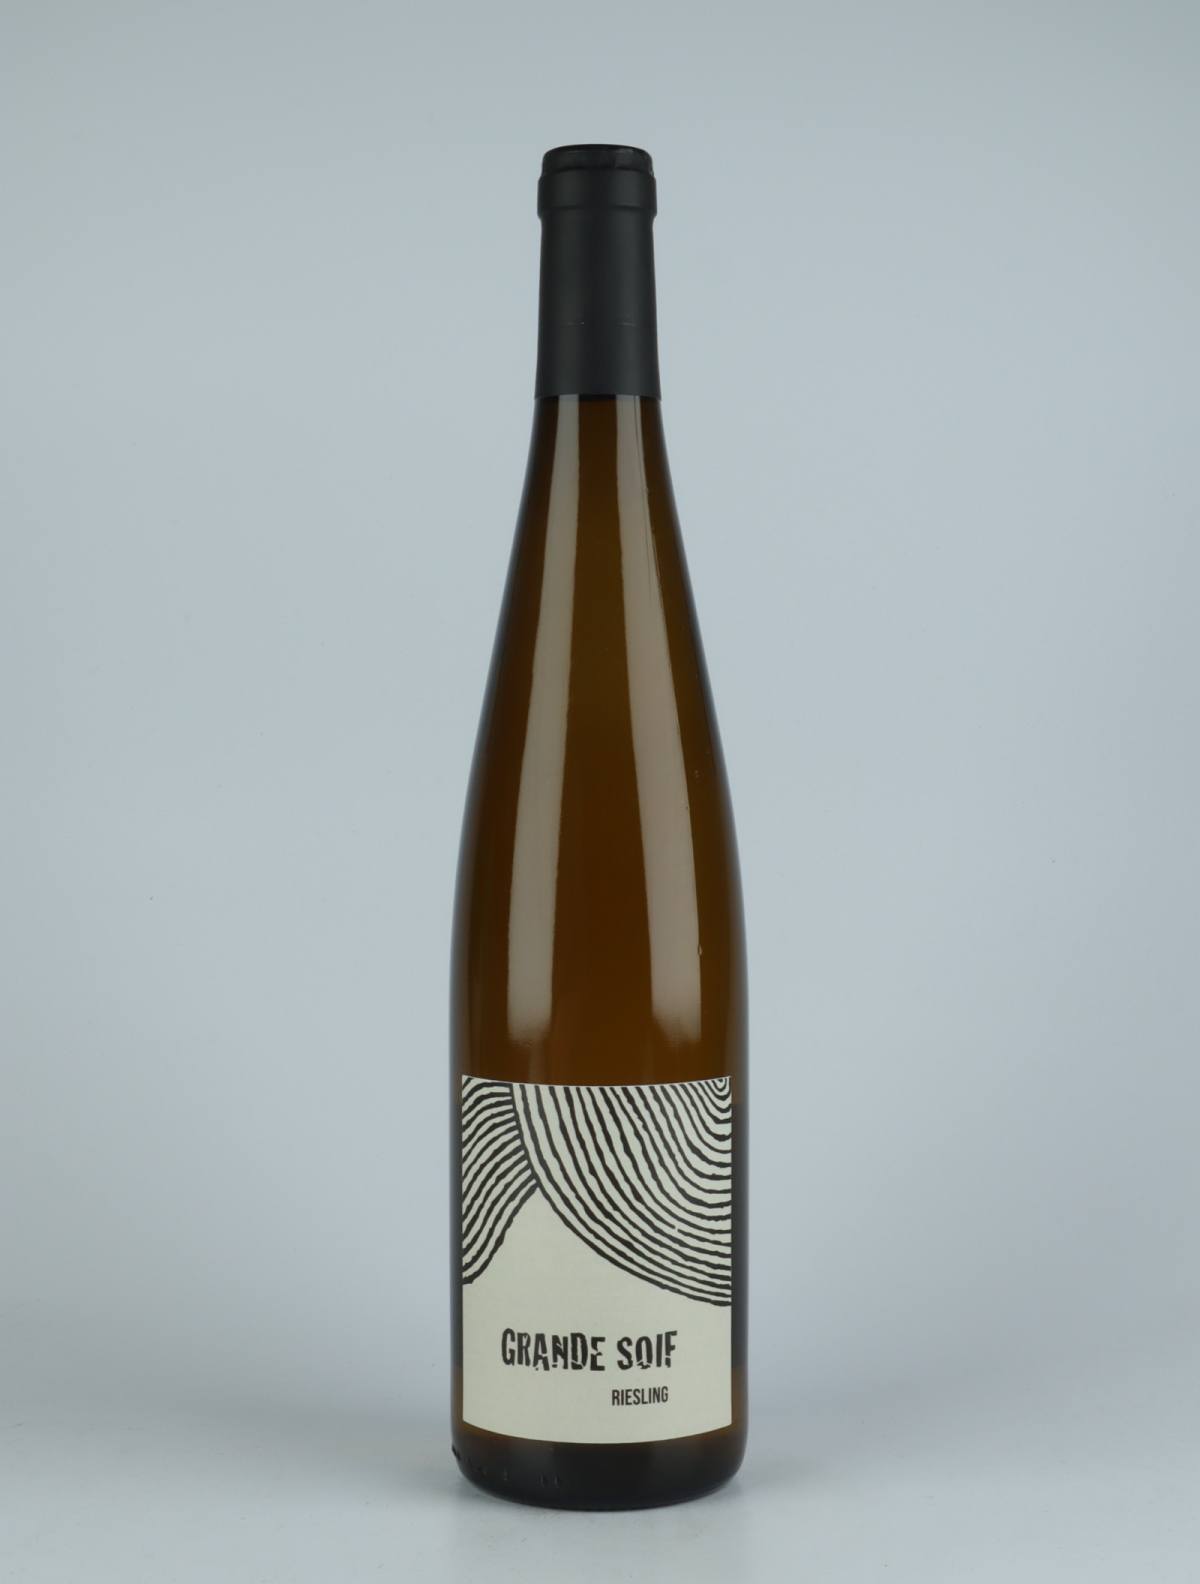 A bottle 2020 Grande Soif White wine from Ruhlmann Dirringer, Alsace in France